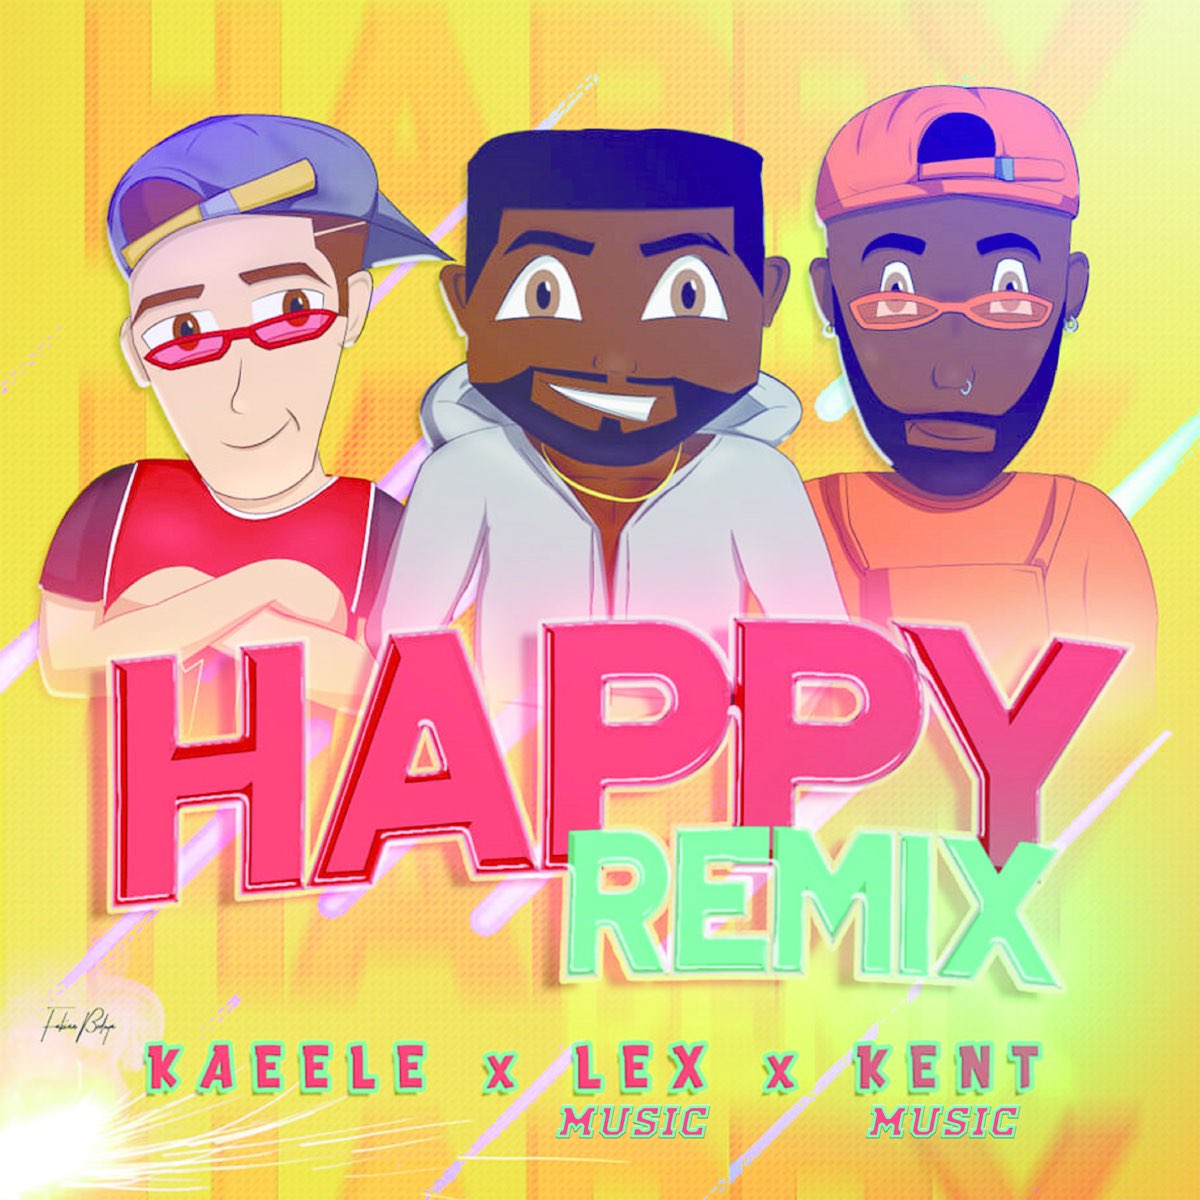 Kaeele. TJ stay Happy Remix. Be happy remix